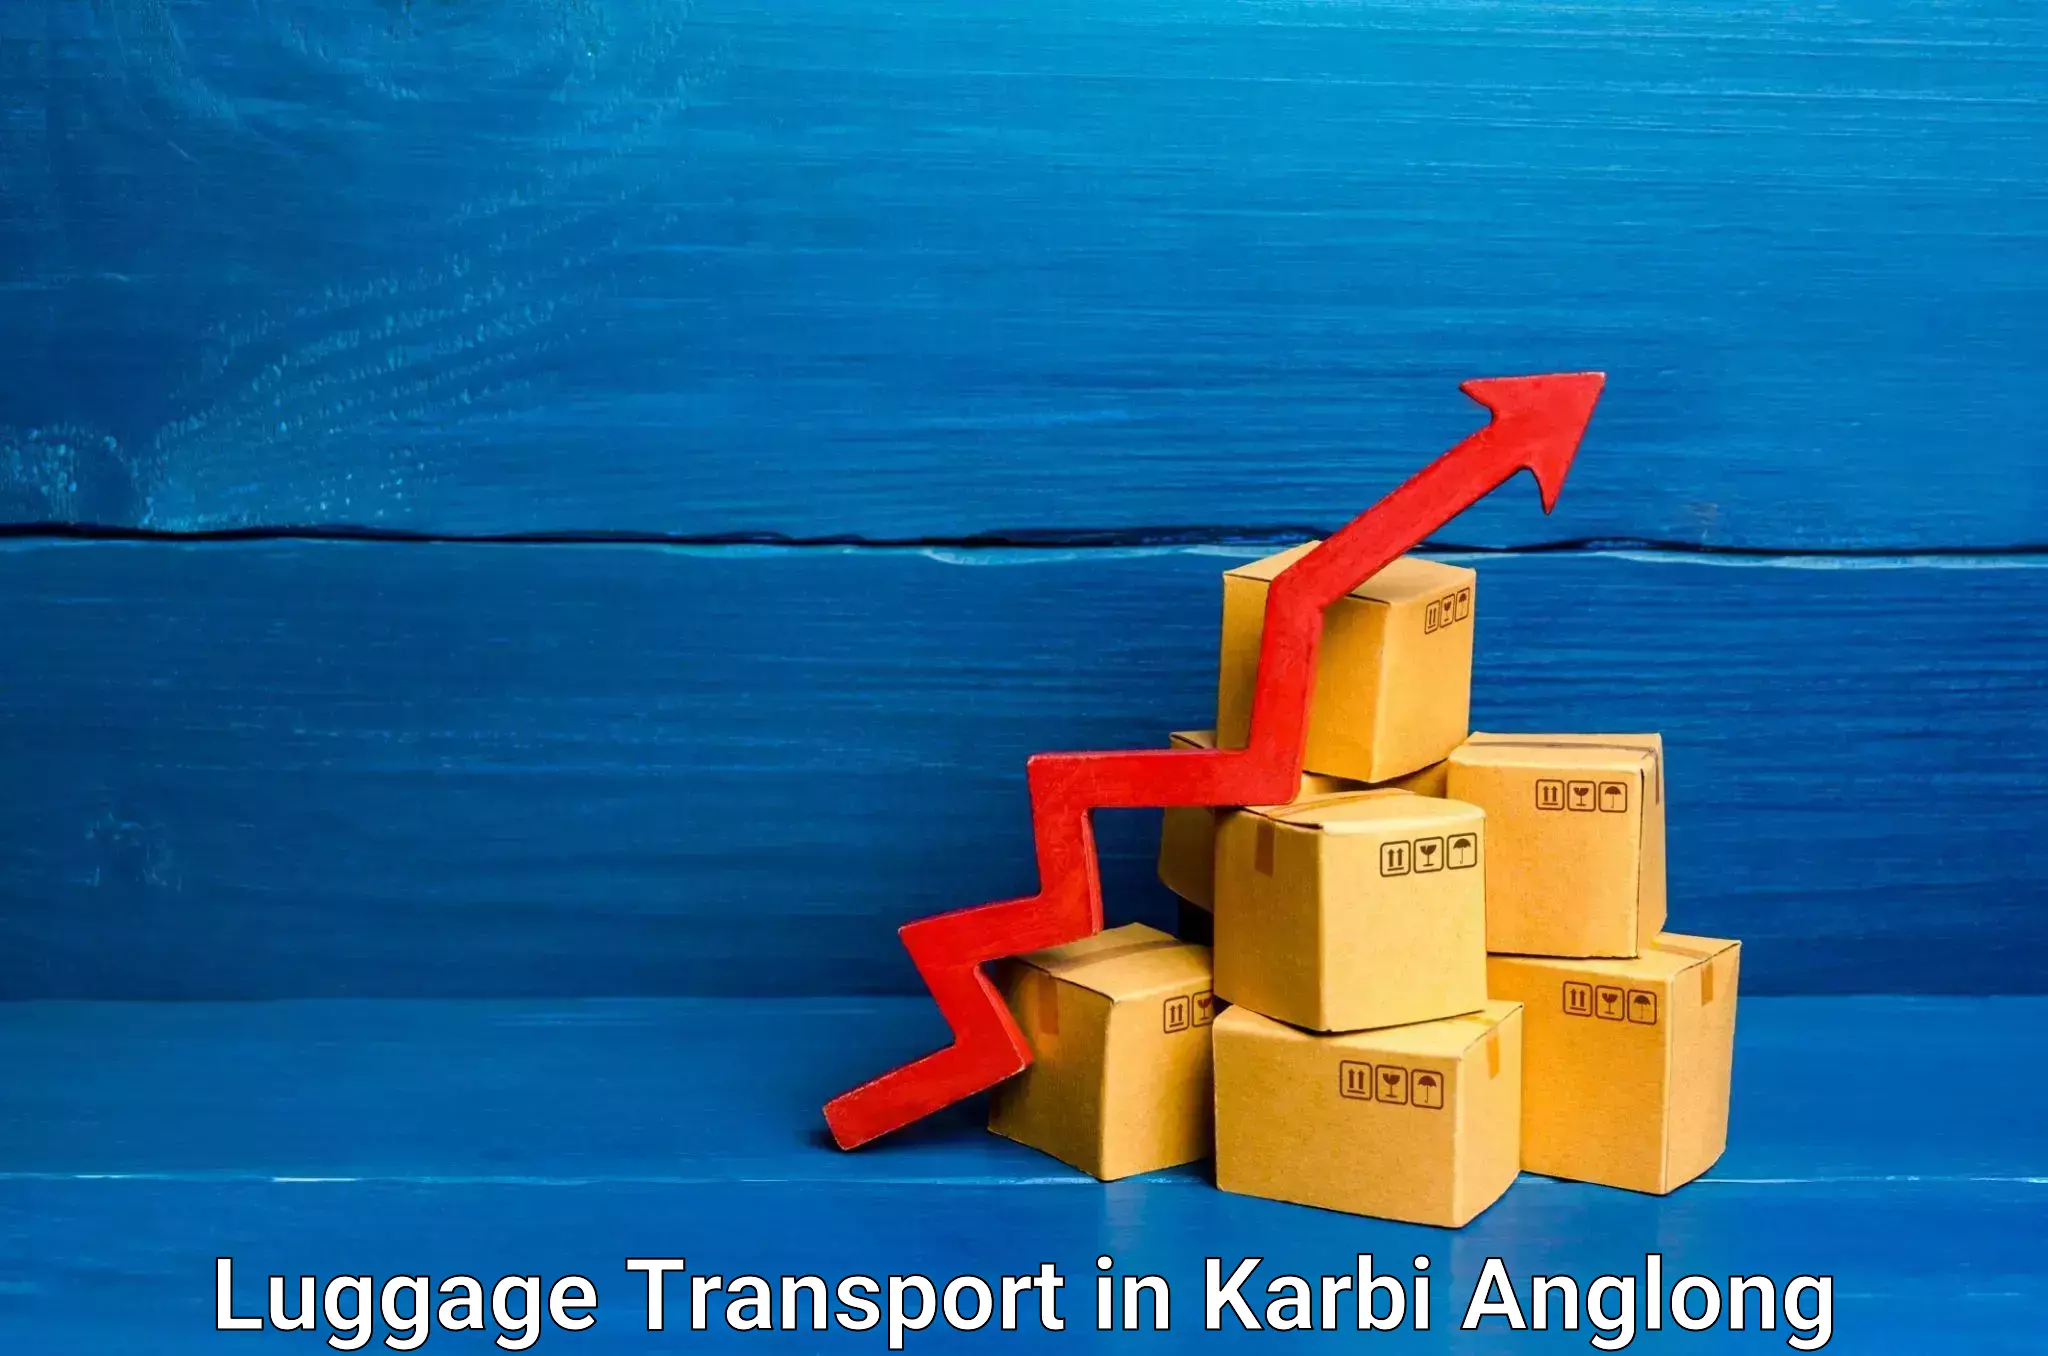 Luggage transport deals in Karbi Anglong